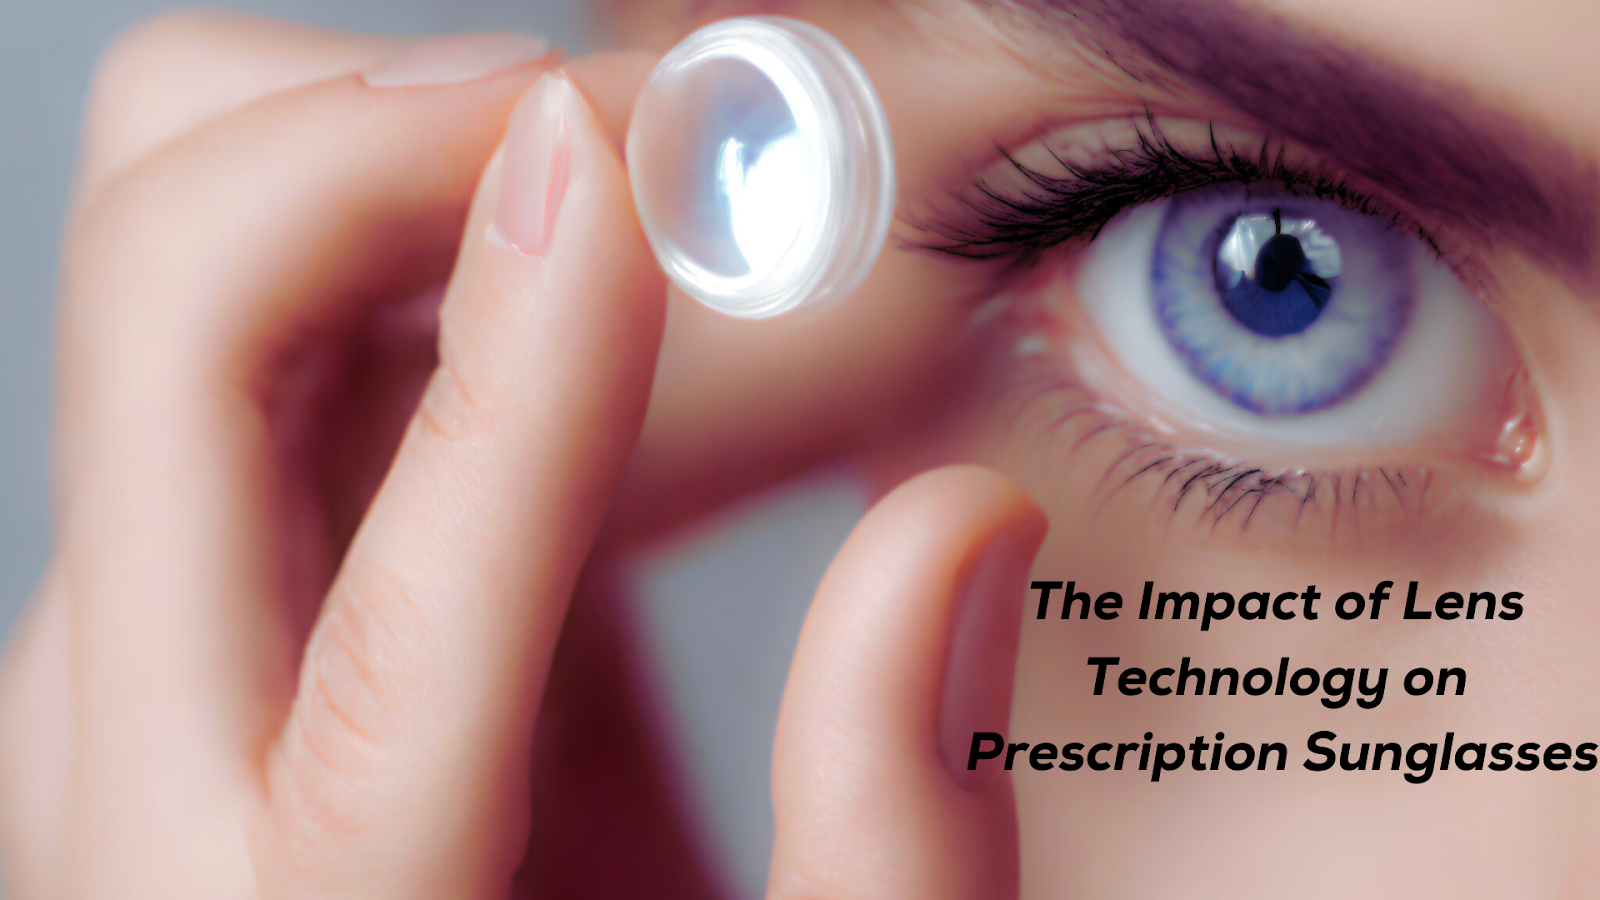 The Impact of Lens Technology on Prescription Sunglasses